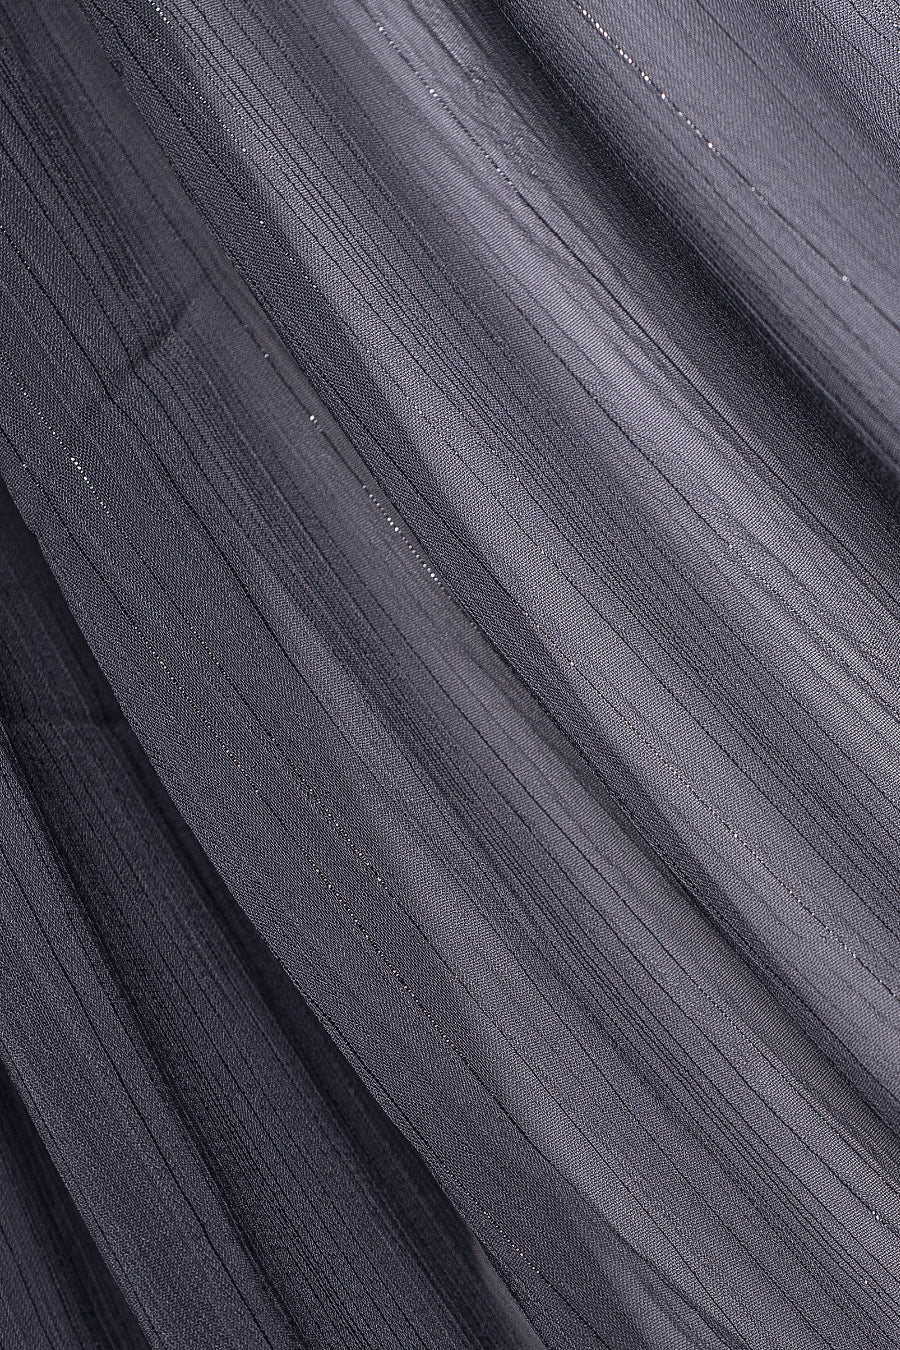 Metallic Chiffon - Charcoal Grey